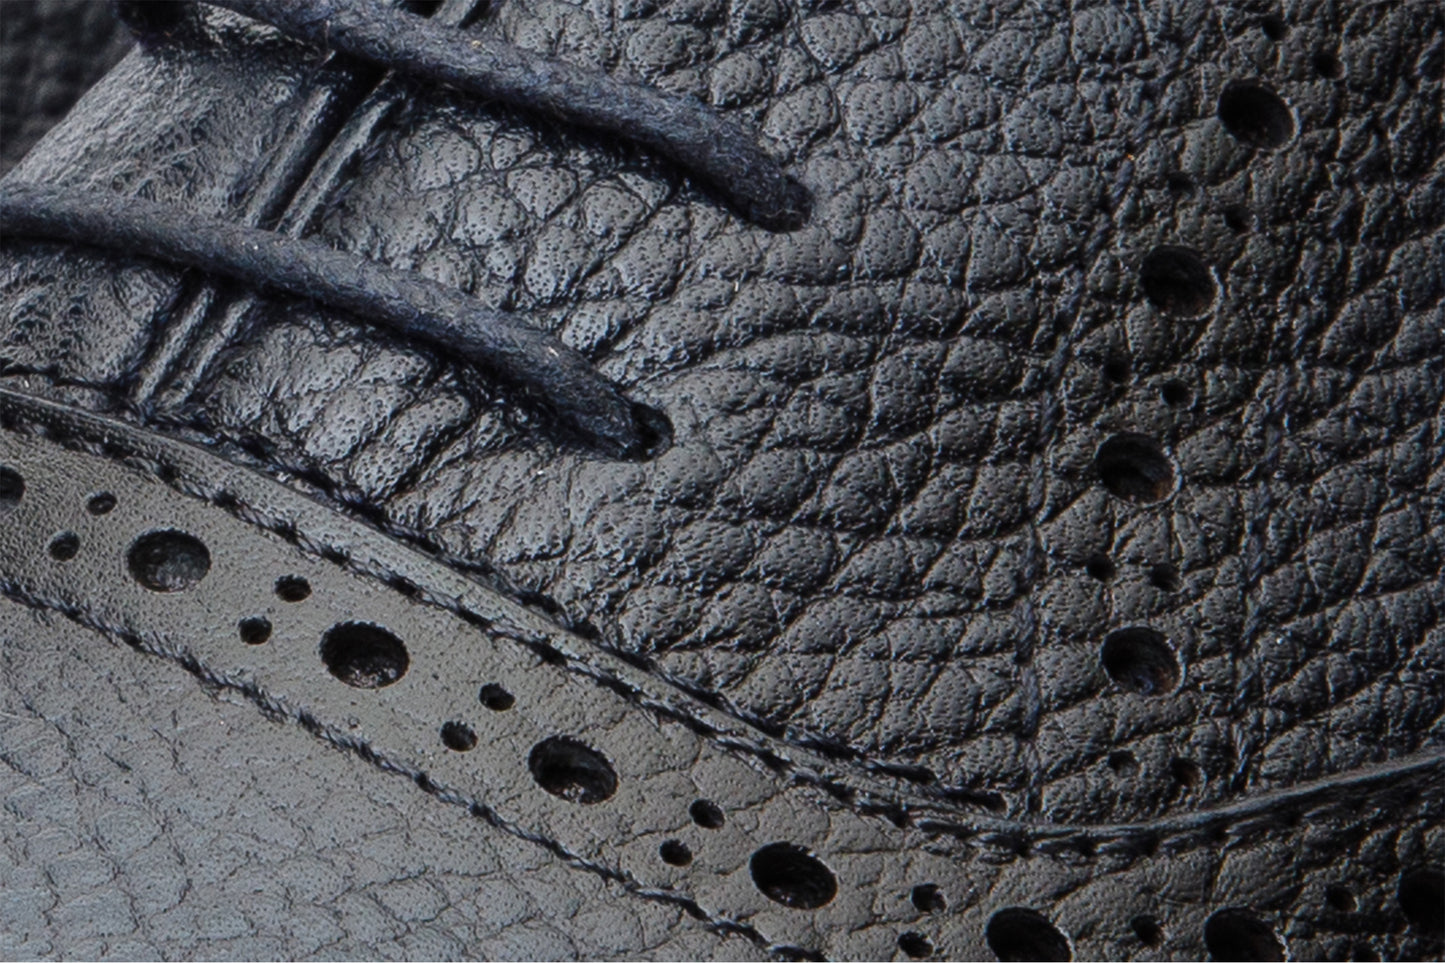 The Draco Handmade Navy Blue Semi Brogue Oxford Men Shoe